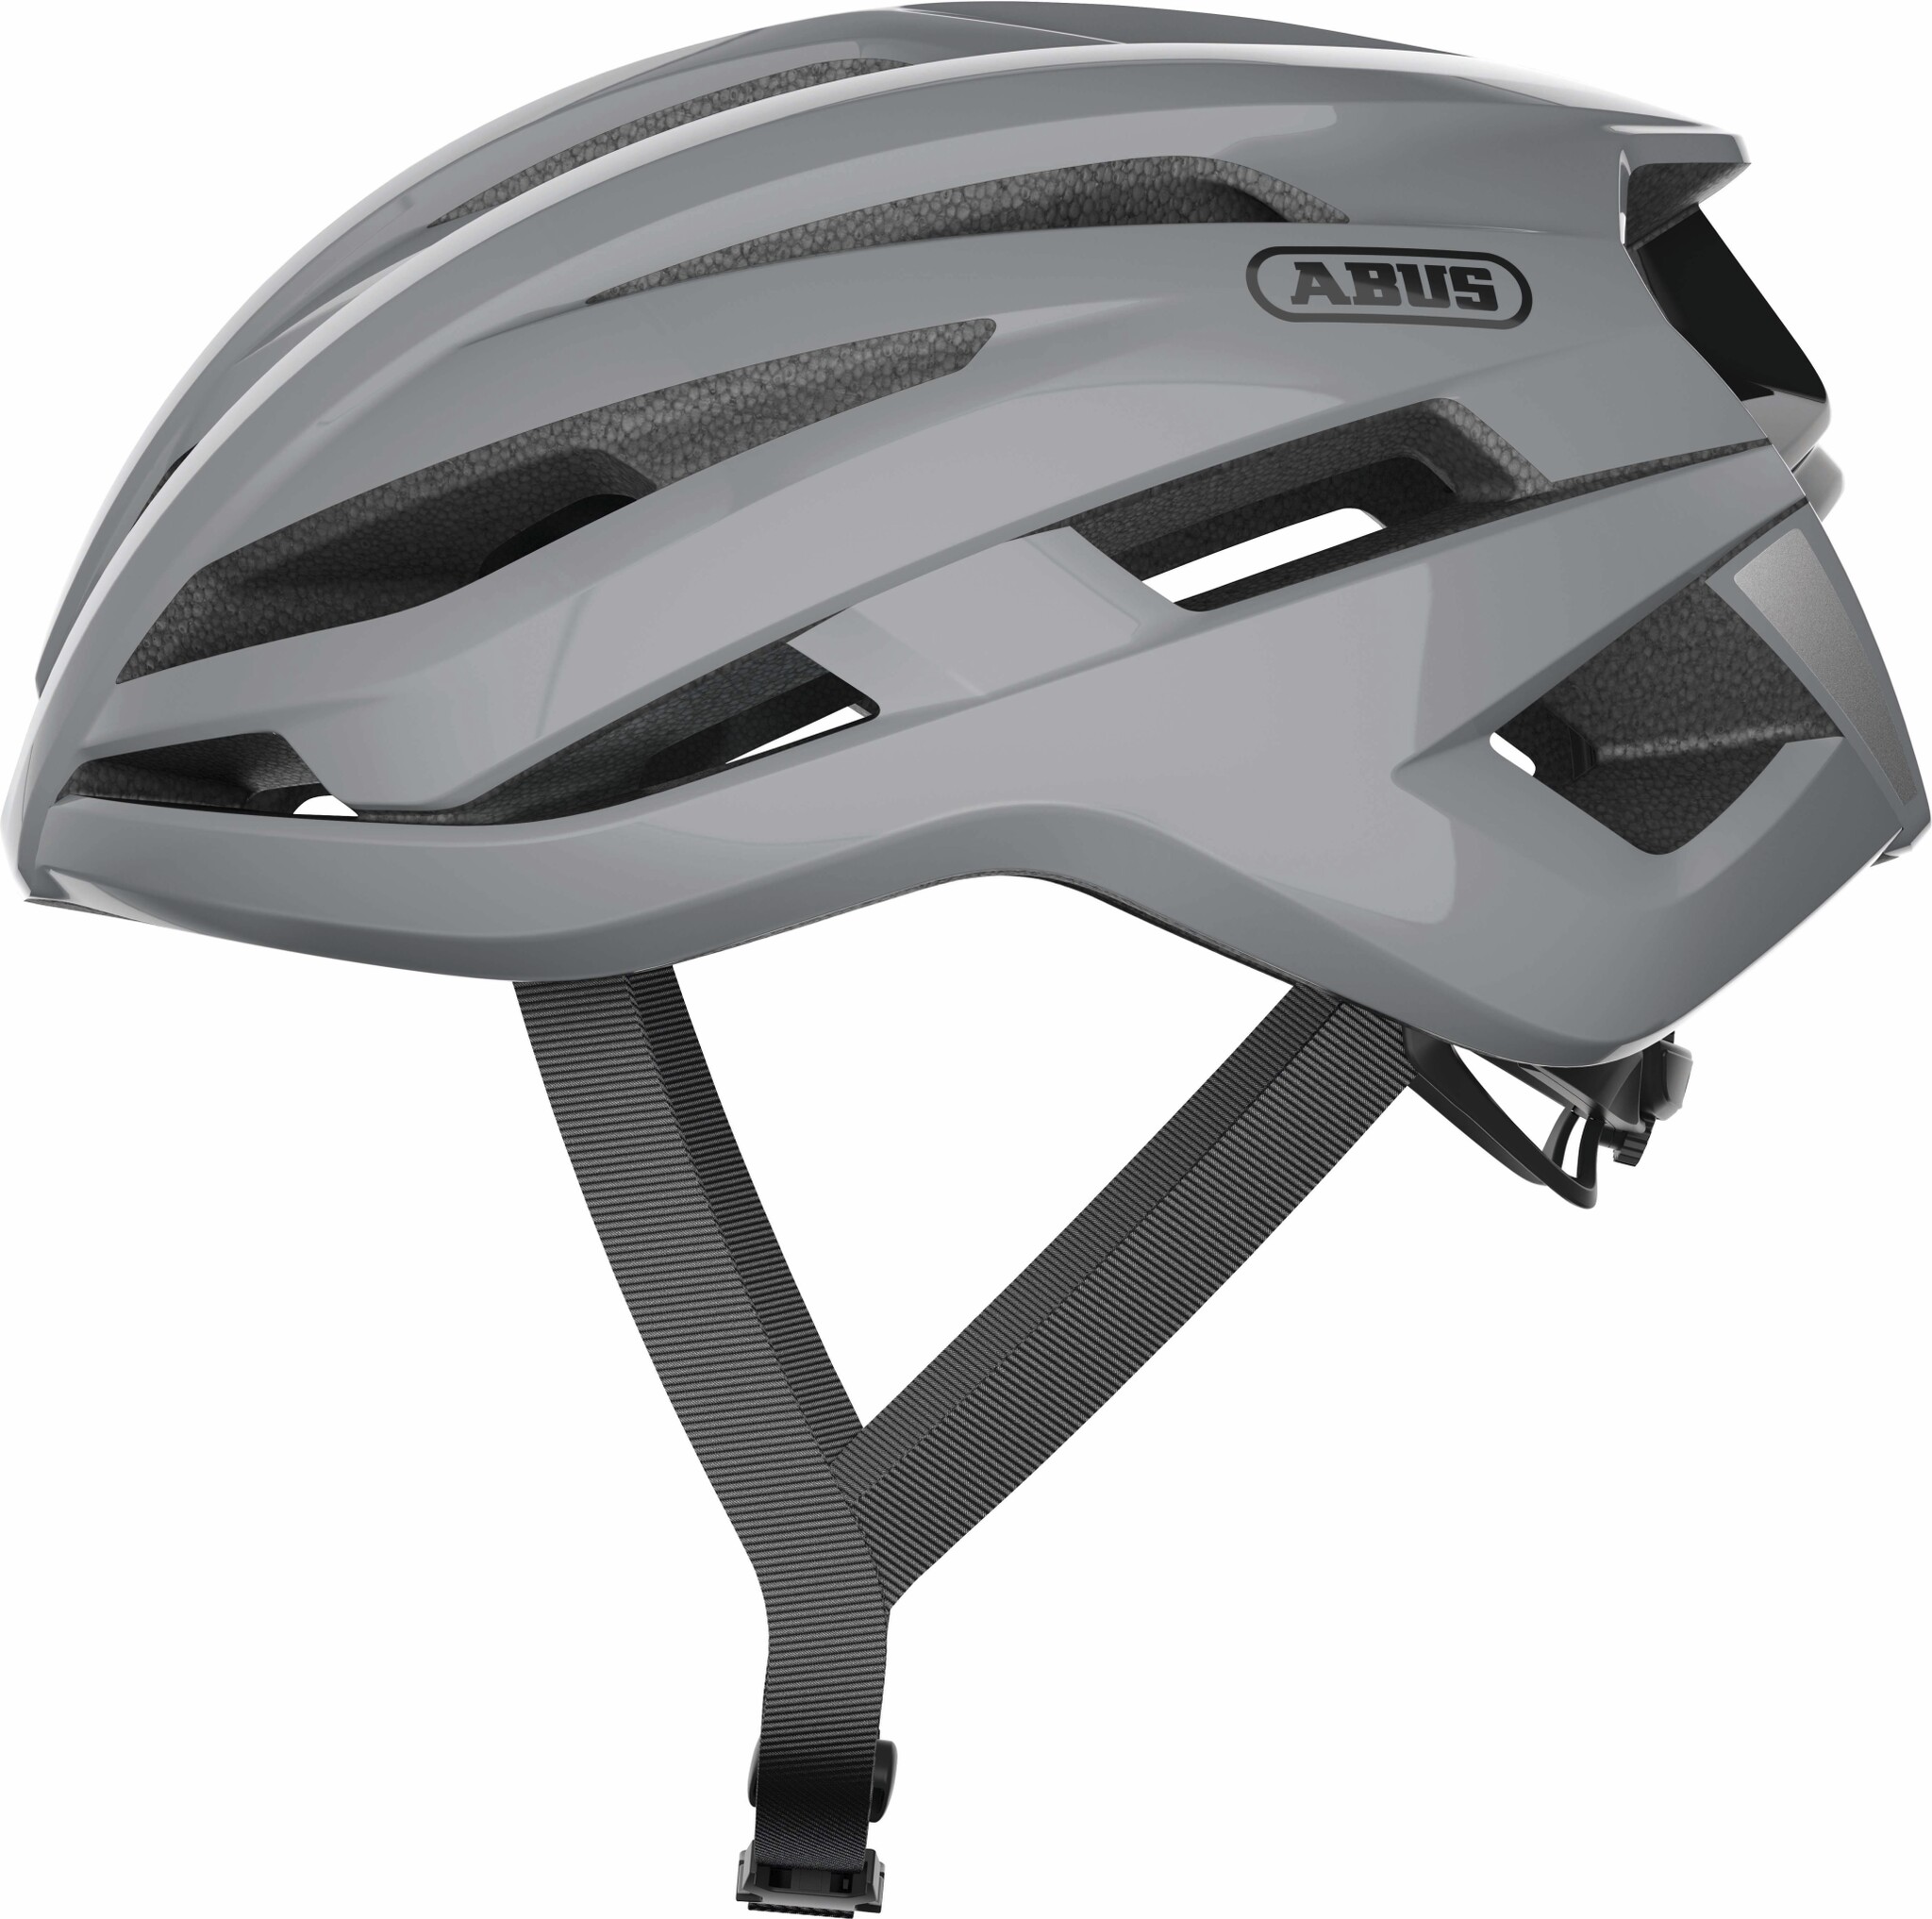 Шлем ABUS STORMCHASER, размер S (51-55 см), Race Grey, серо-черный фото 